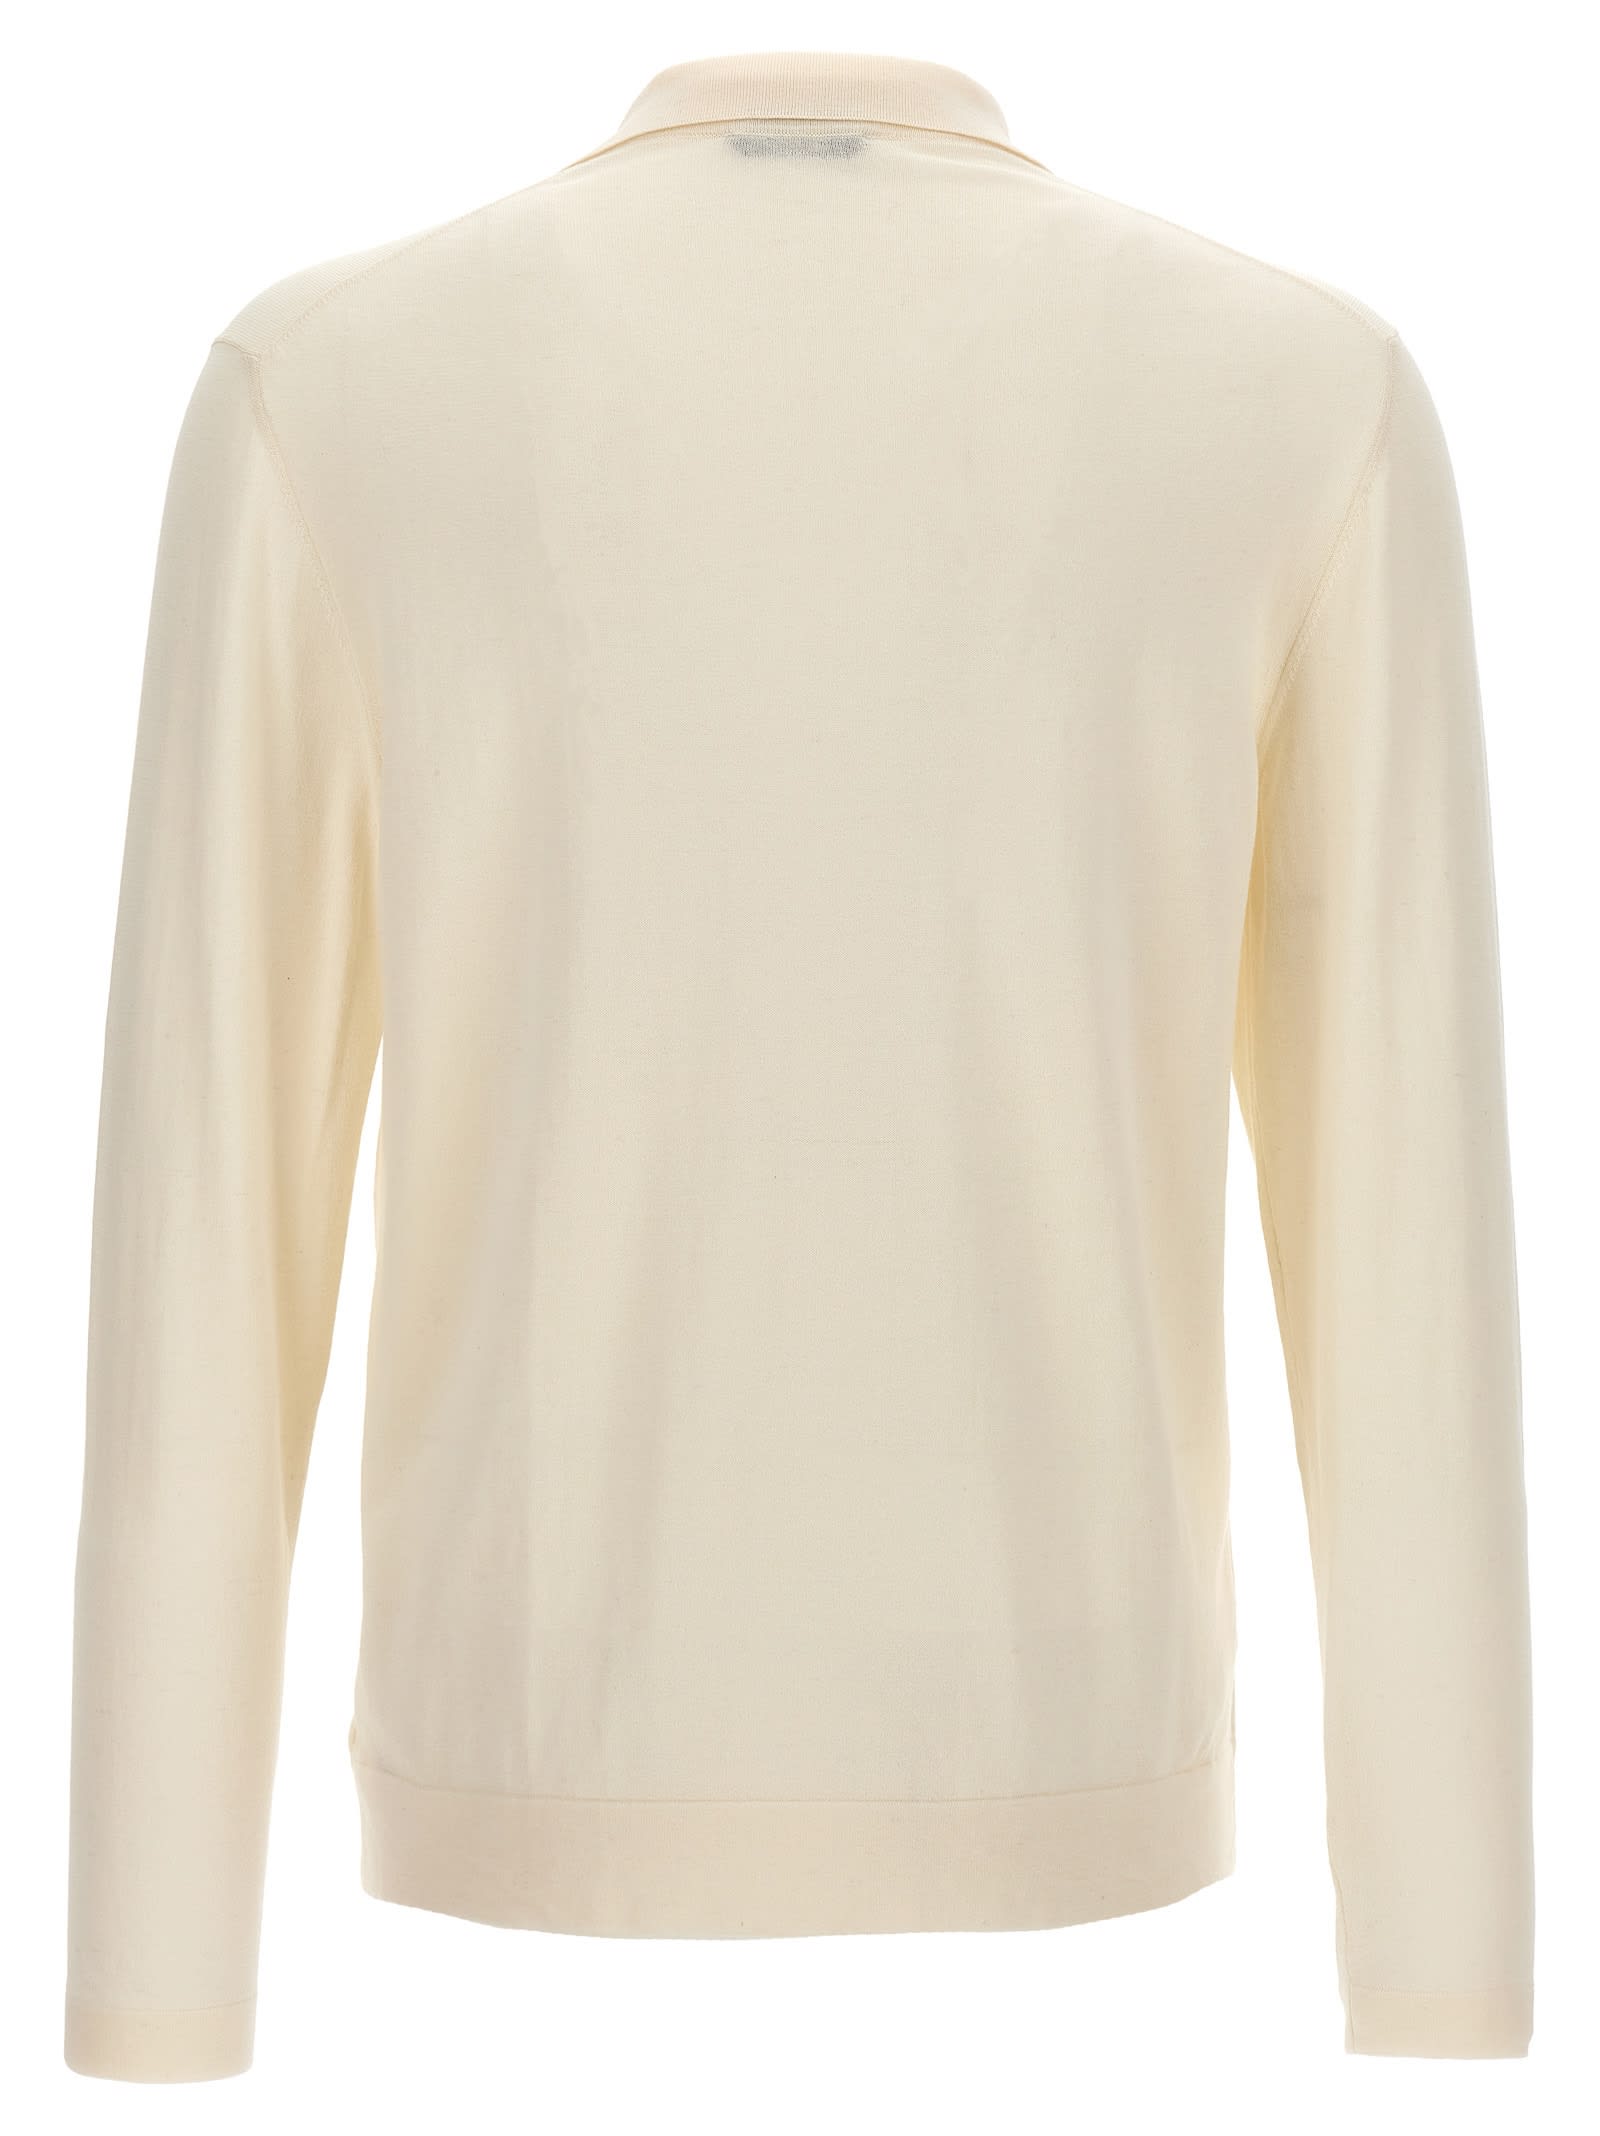 Shop Zanone Cotton Silk Polo Shirt In White